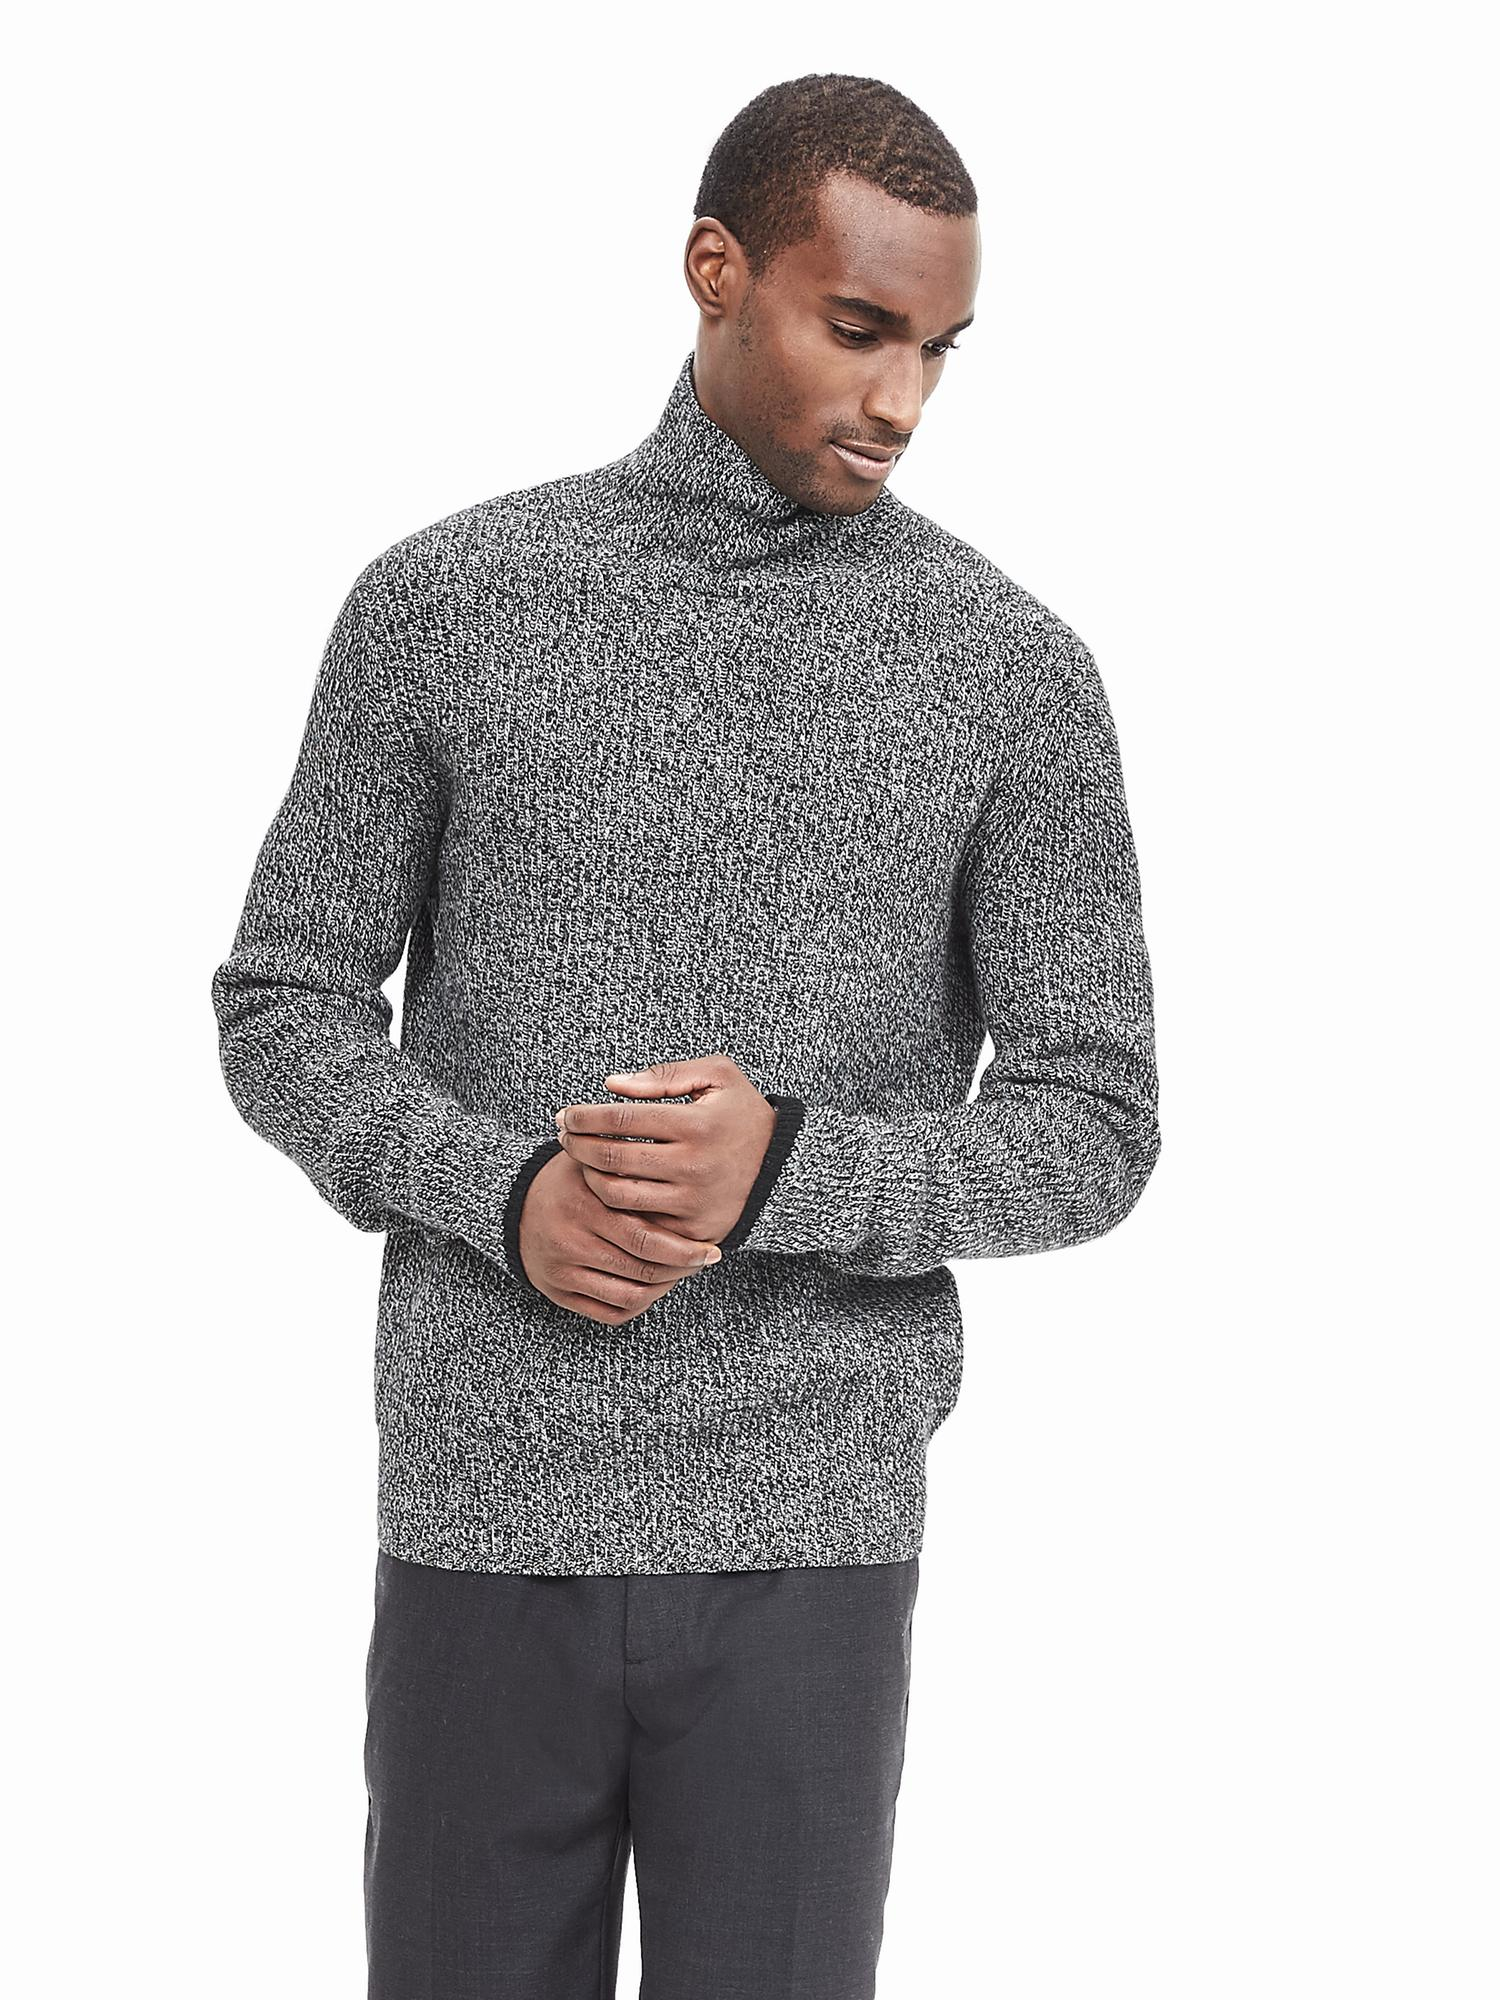 leappls 3XLcashmere sweater men clothes 2018 new blusa